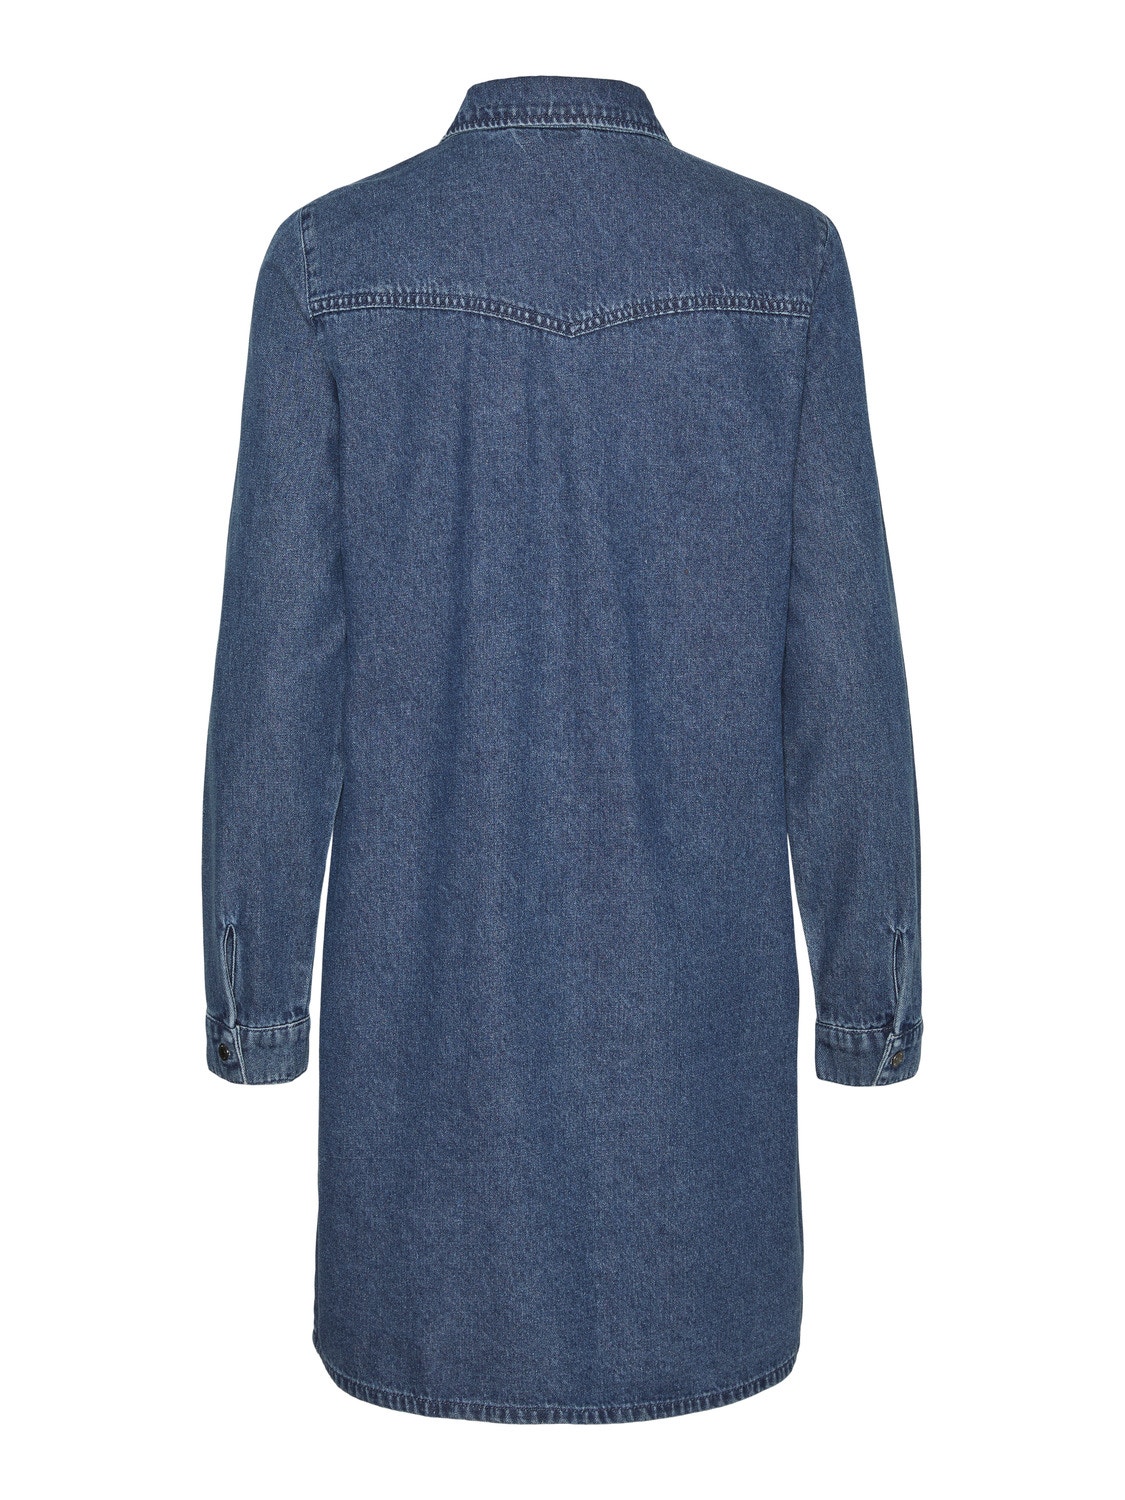 Vero Moda VMJENNIE Kurzes Kleid -Medium Blue Denim - 10310968